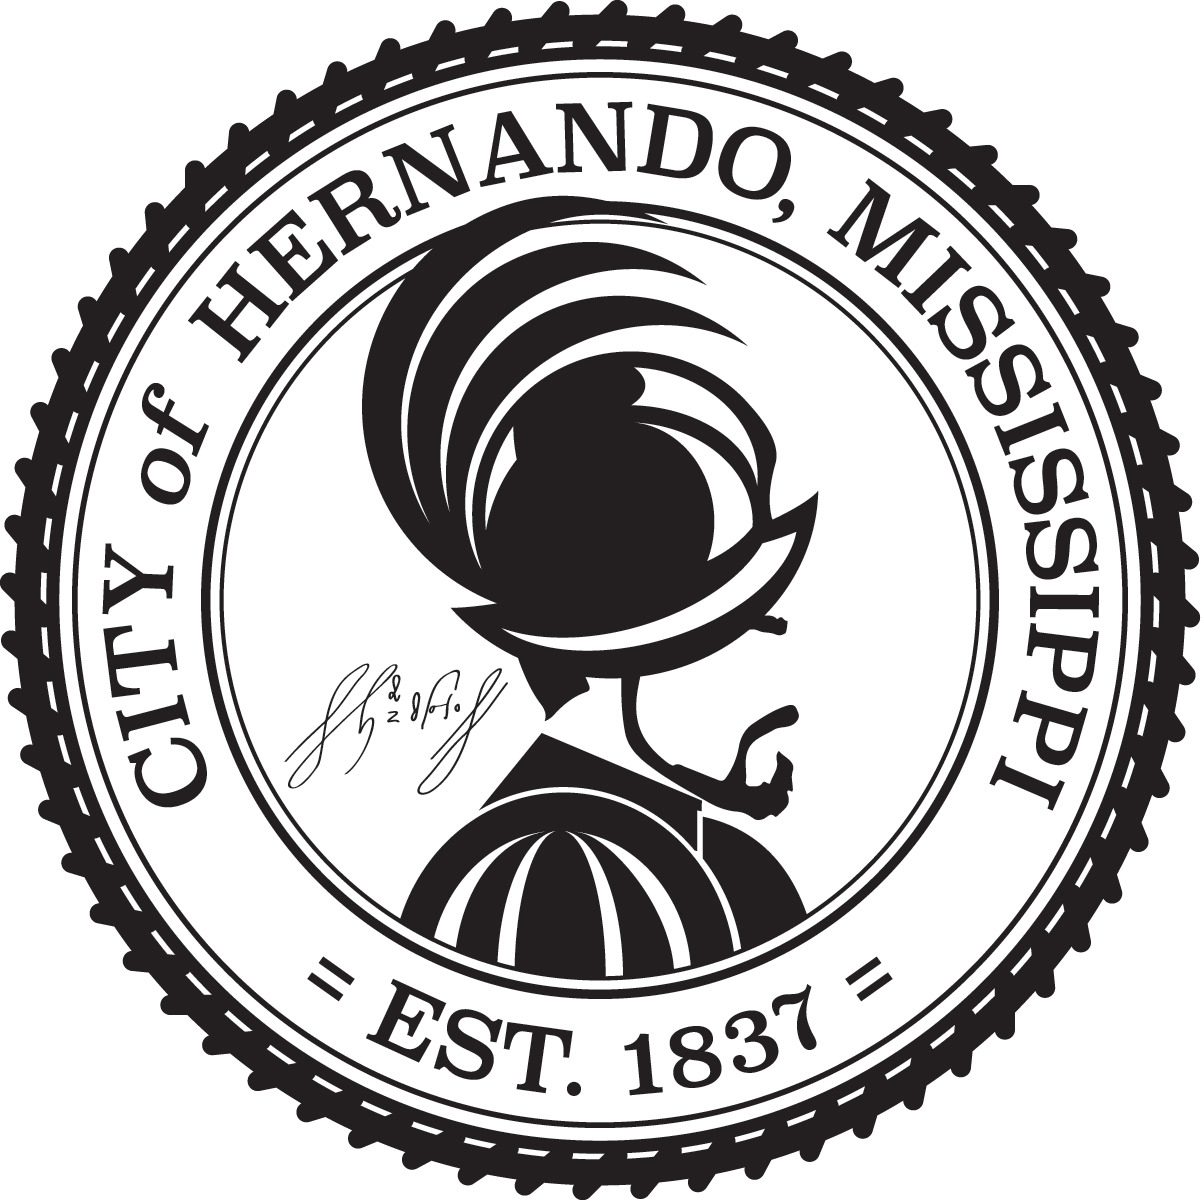 The City of Hernando, Mississippi